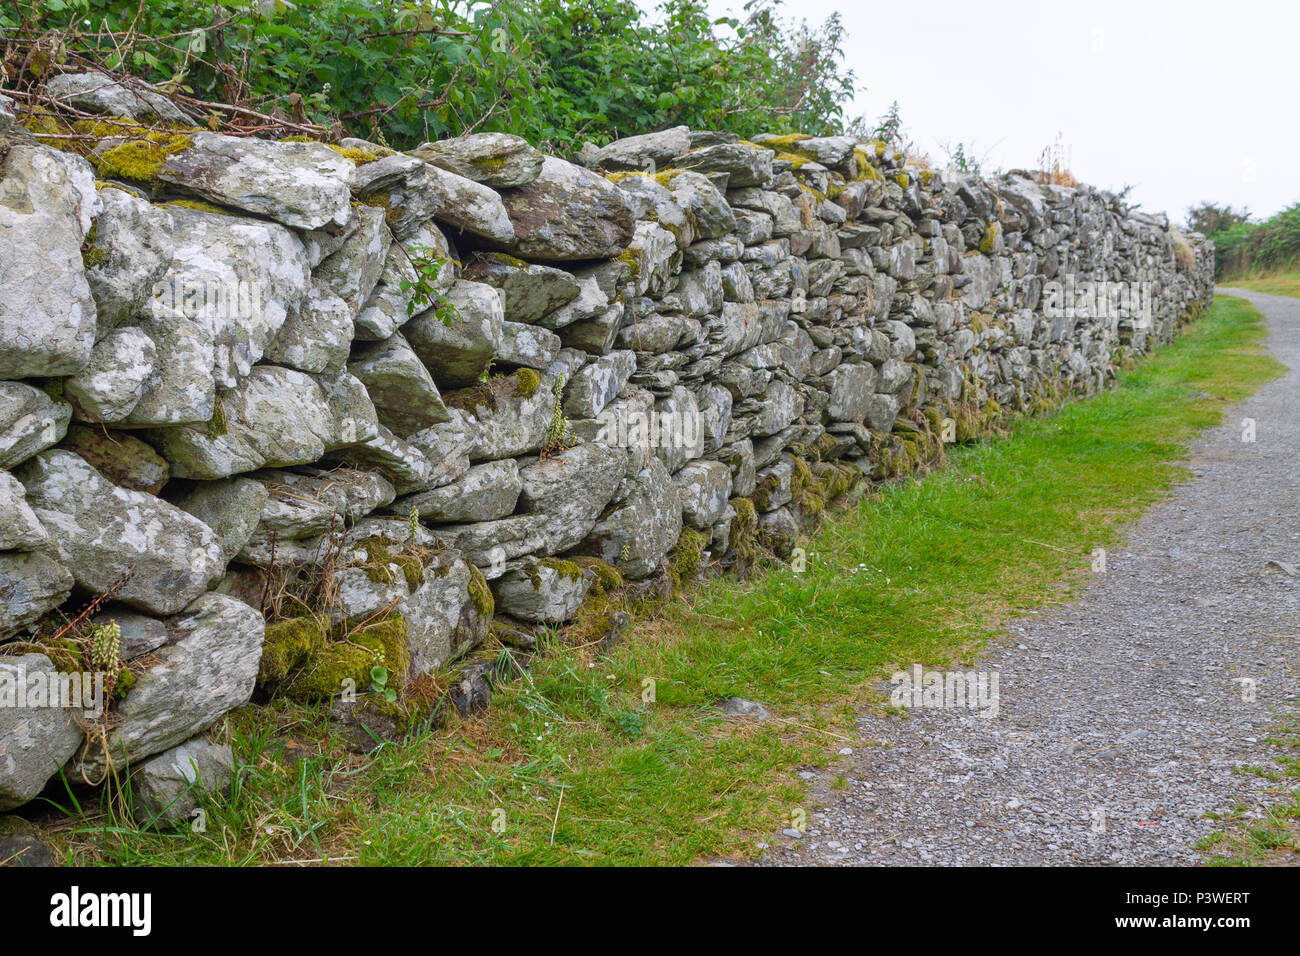 dry stone wall alongside a footpath. Stock Photo